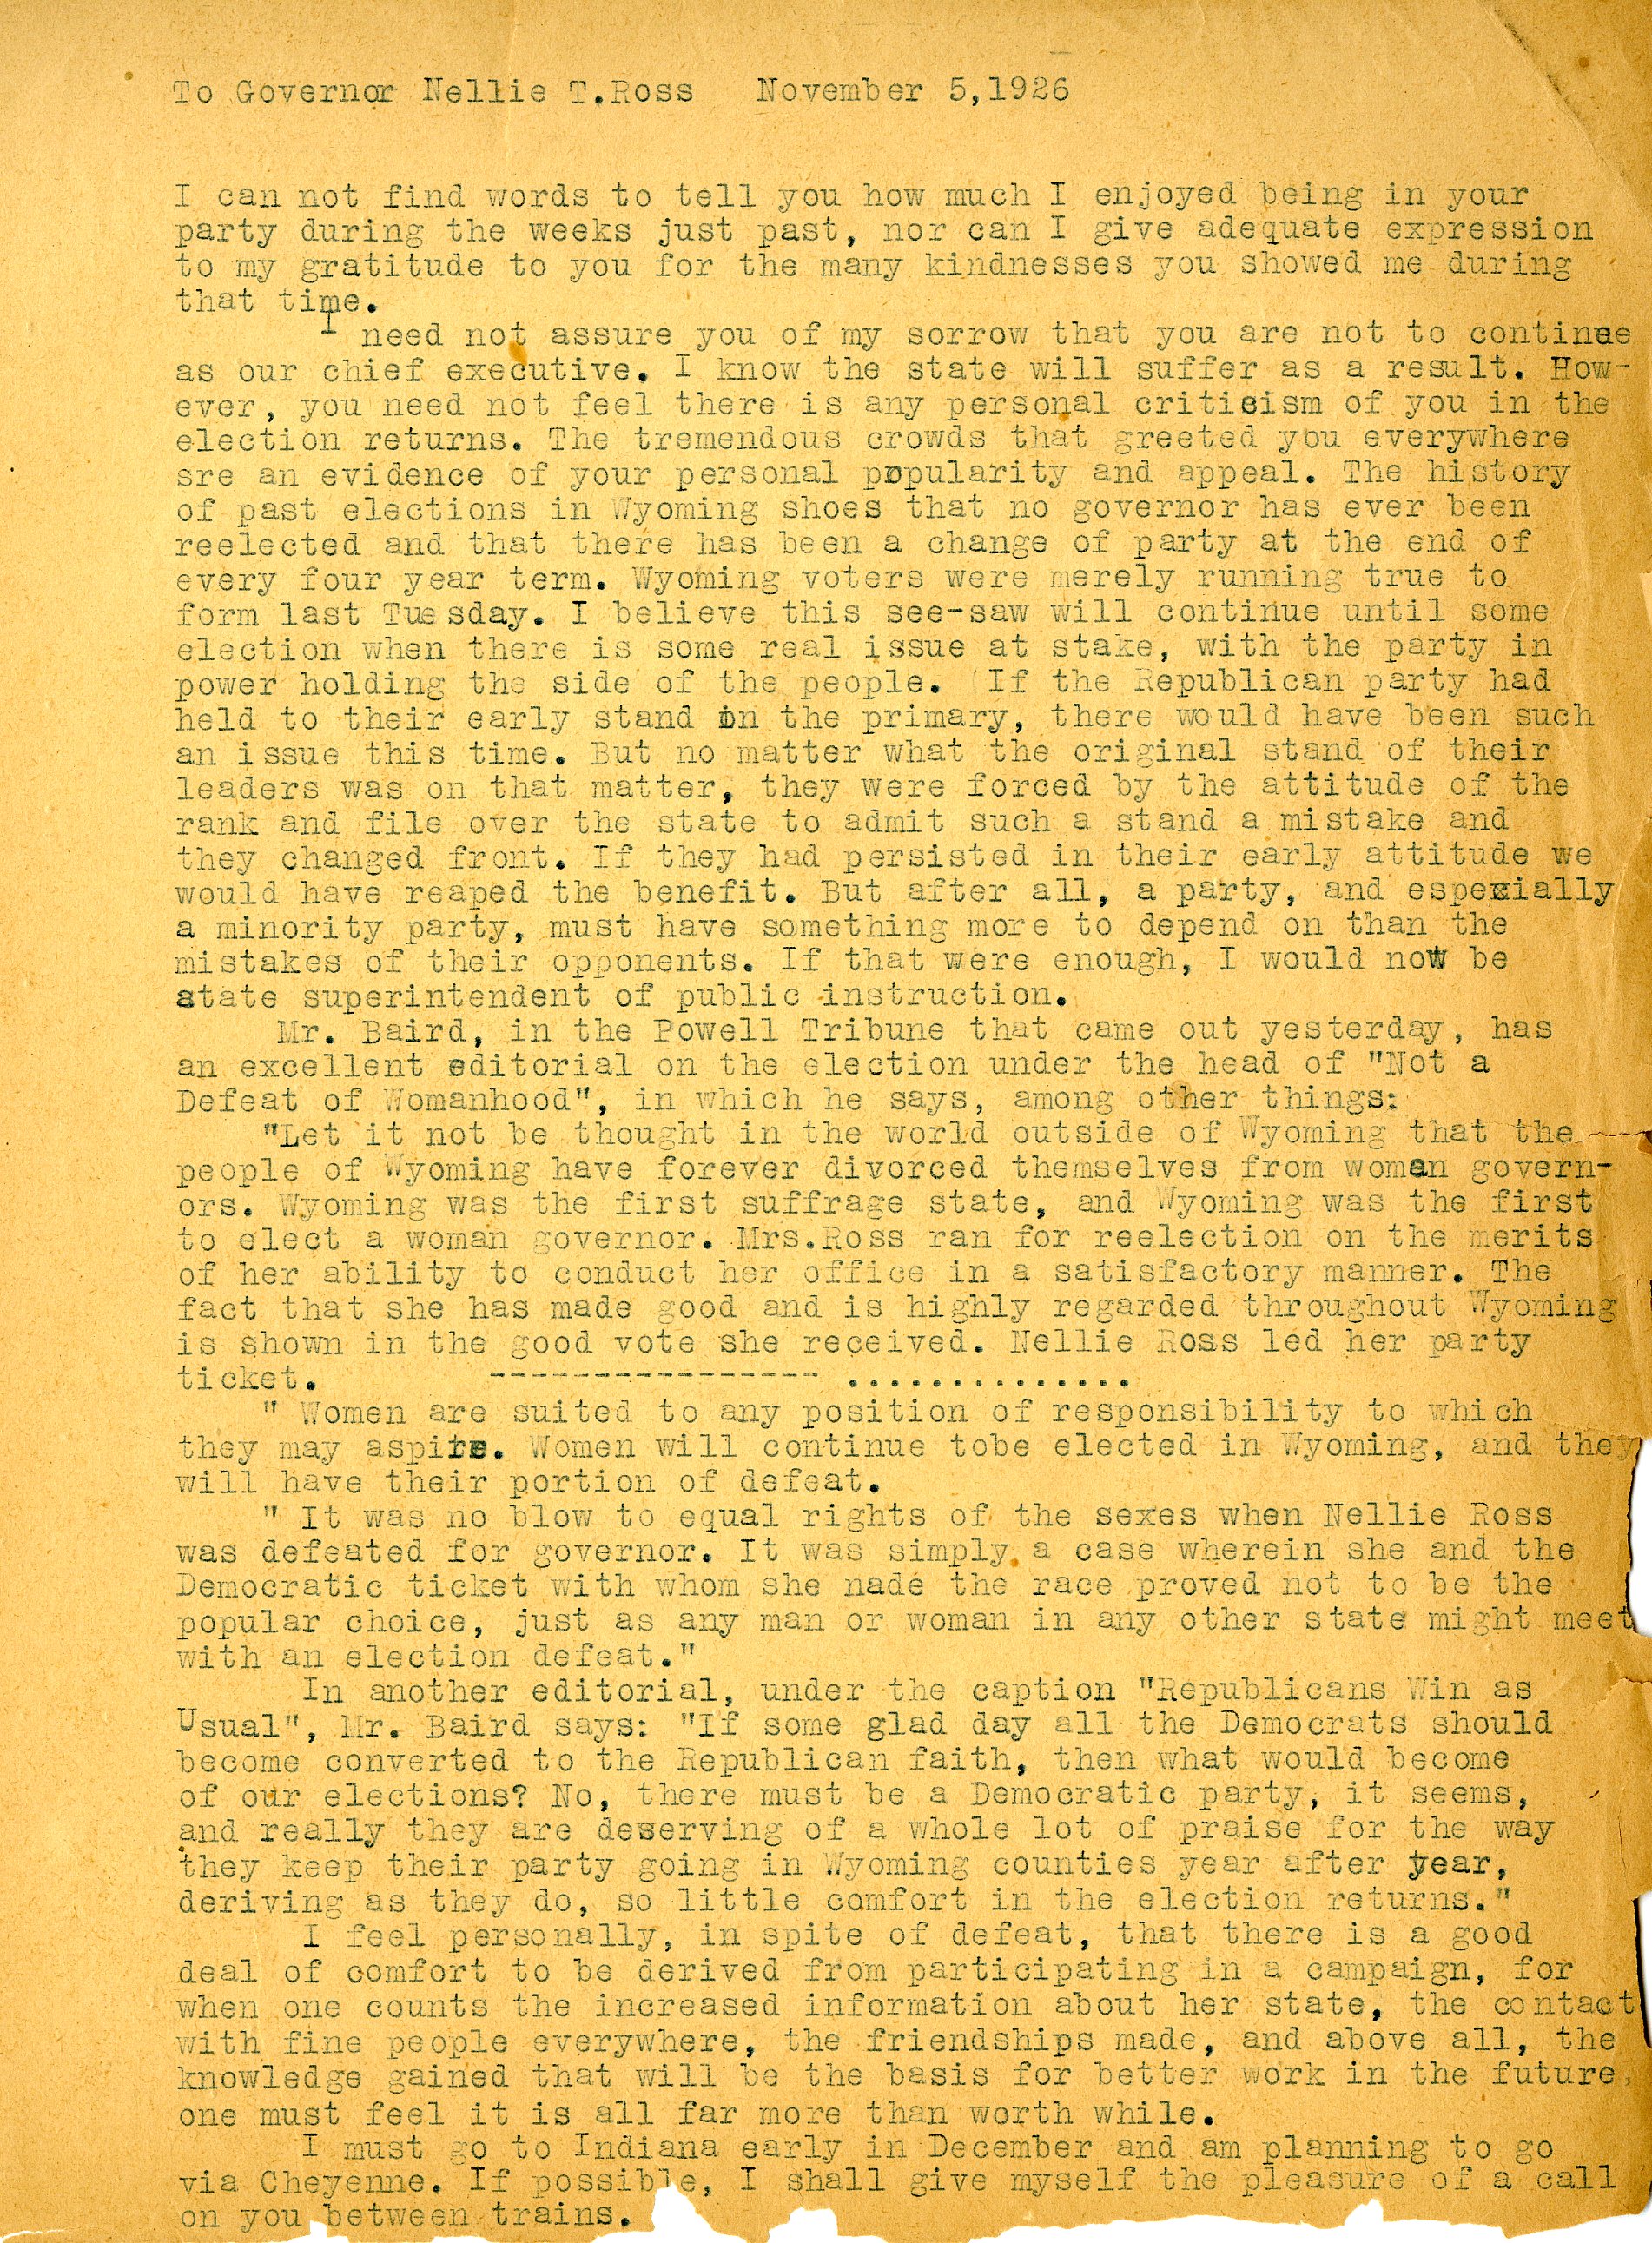 CCH to NTR, 5 November 1926